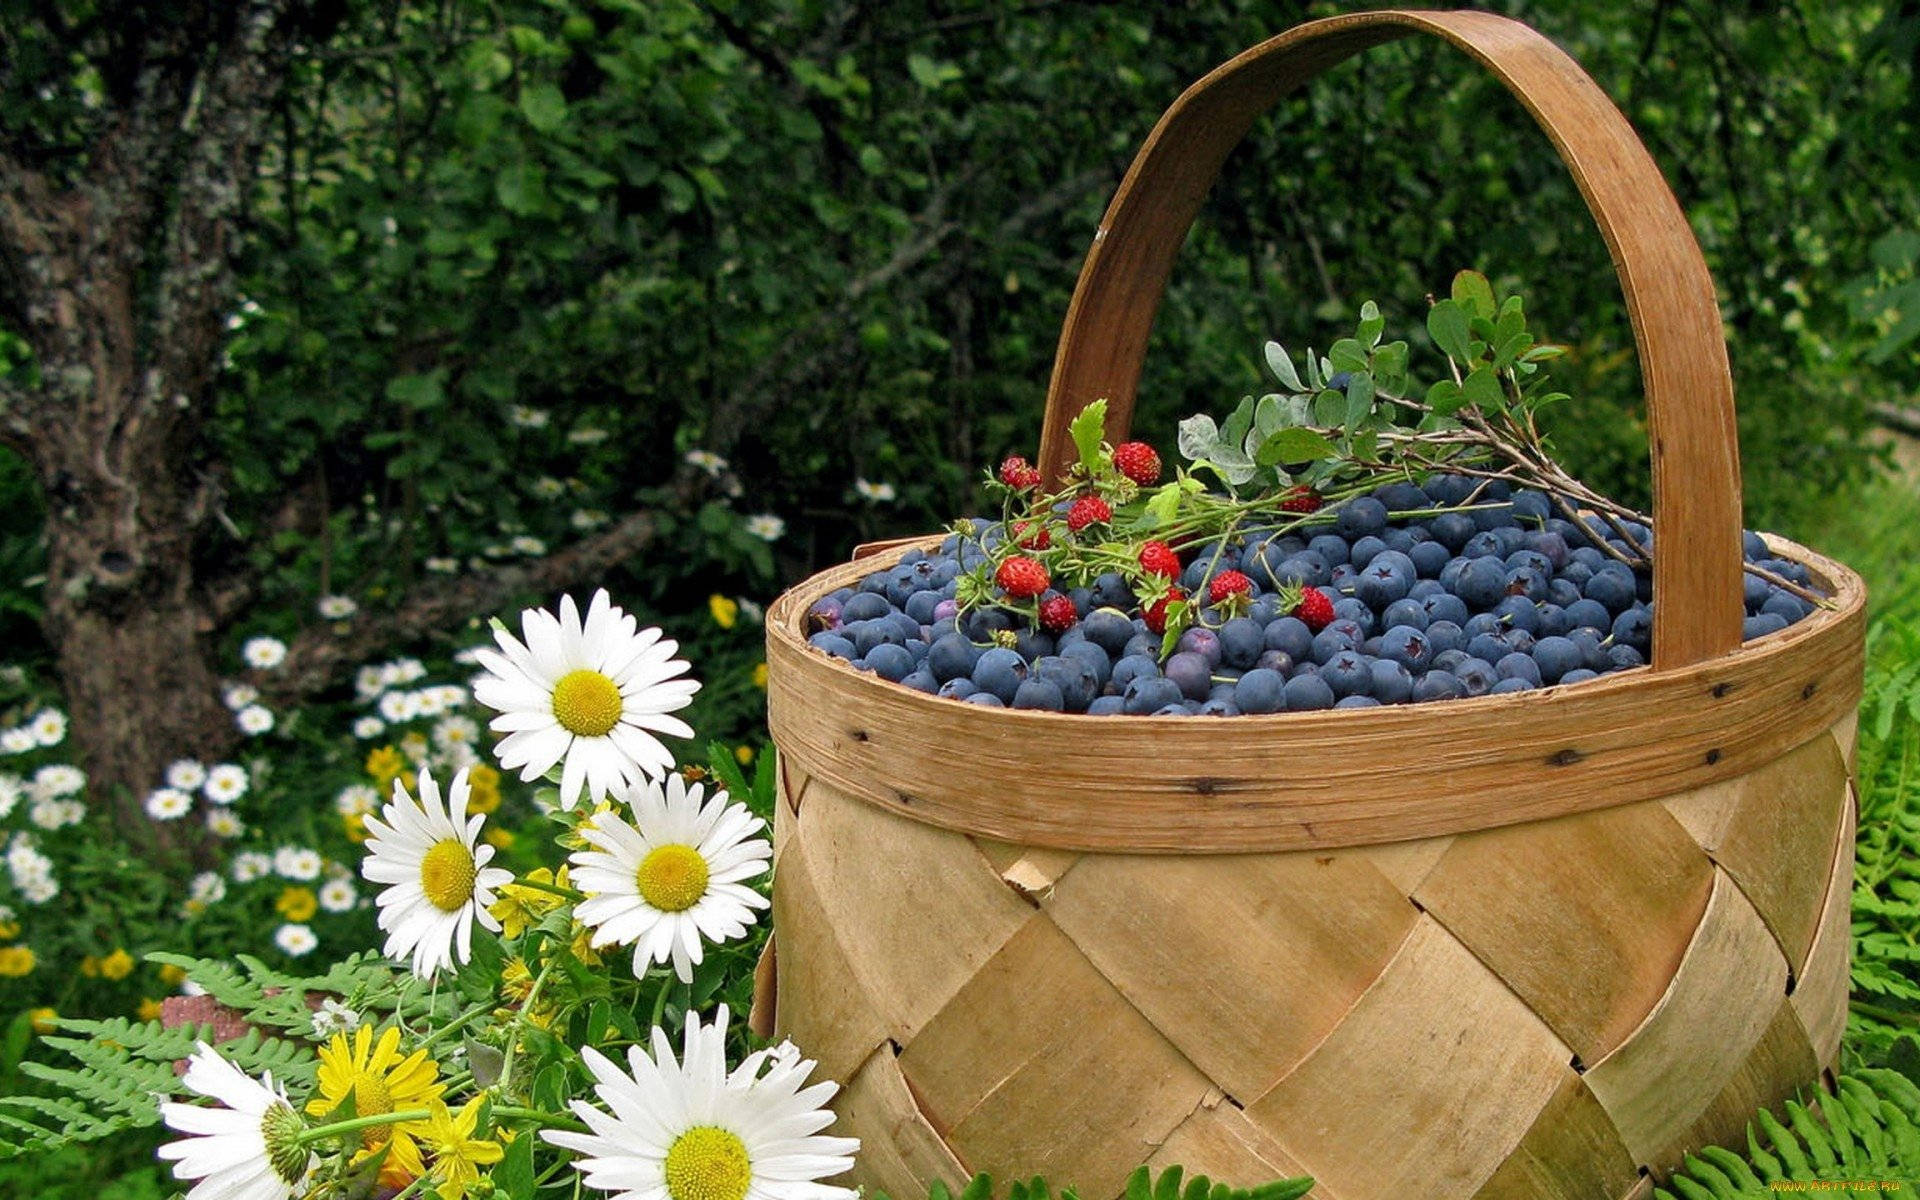 Basket Of Blueberries On A Garden Wallpaper